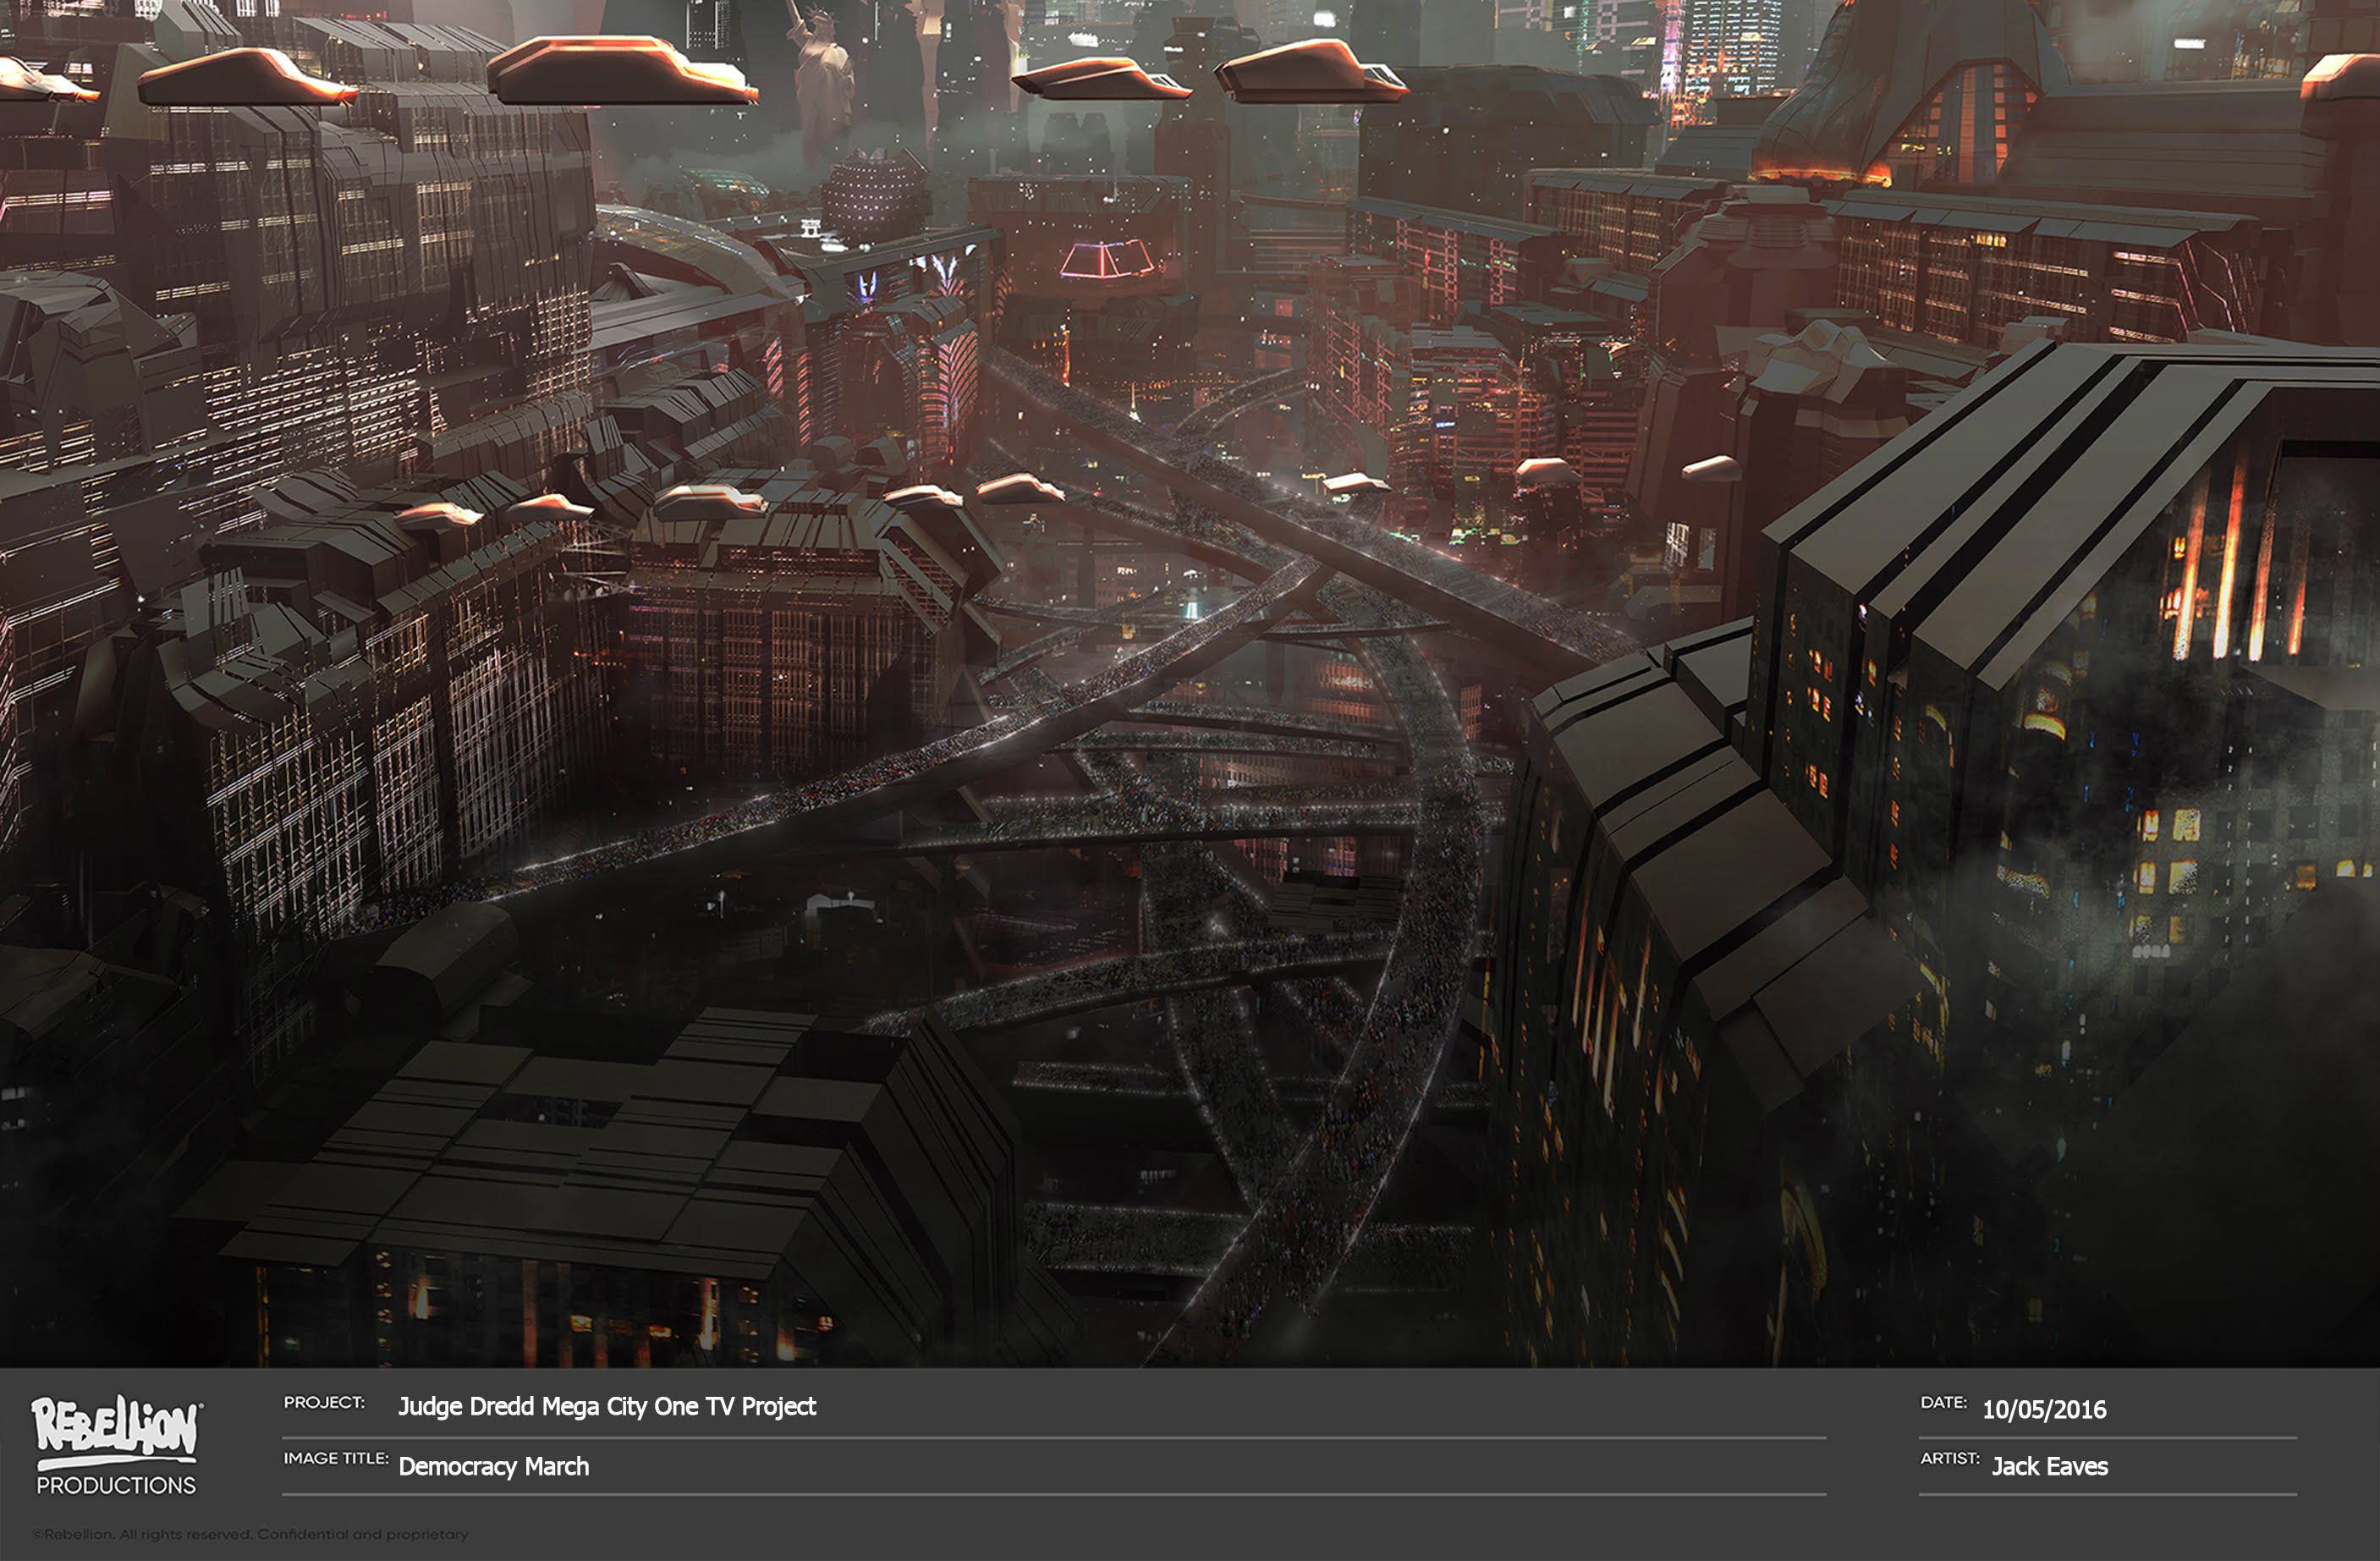 Judge Dredd TV Show Concept Art: Welcome Back to Mega-City One